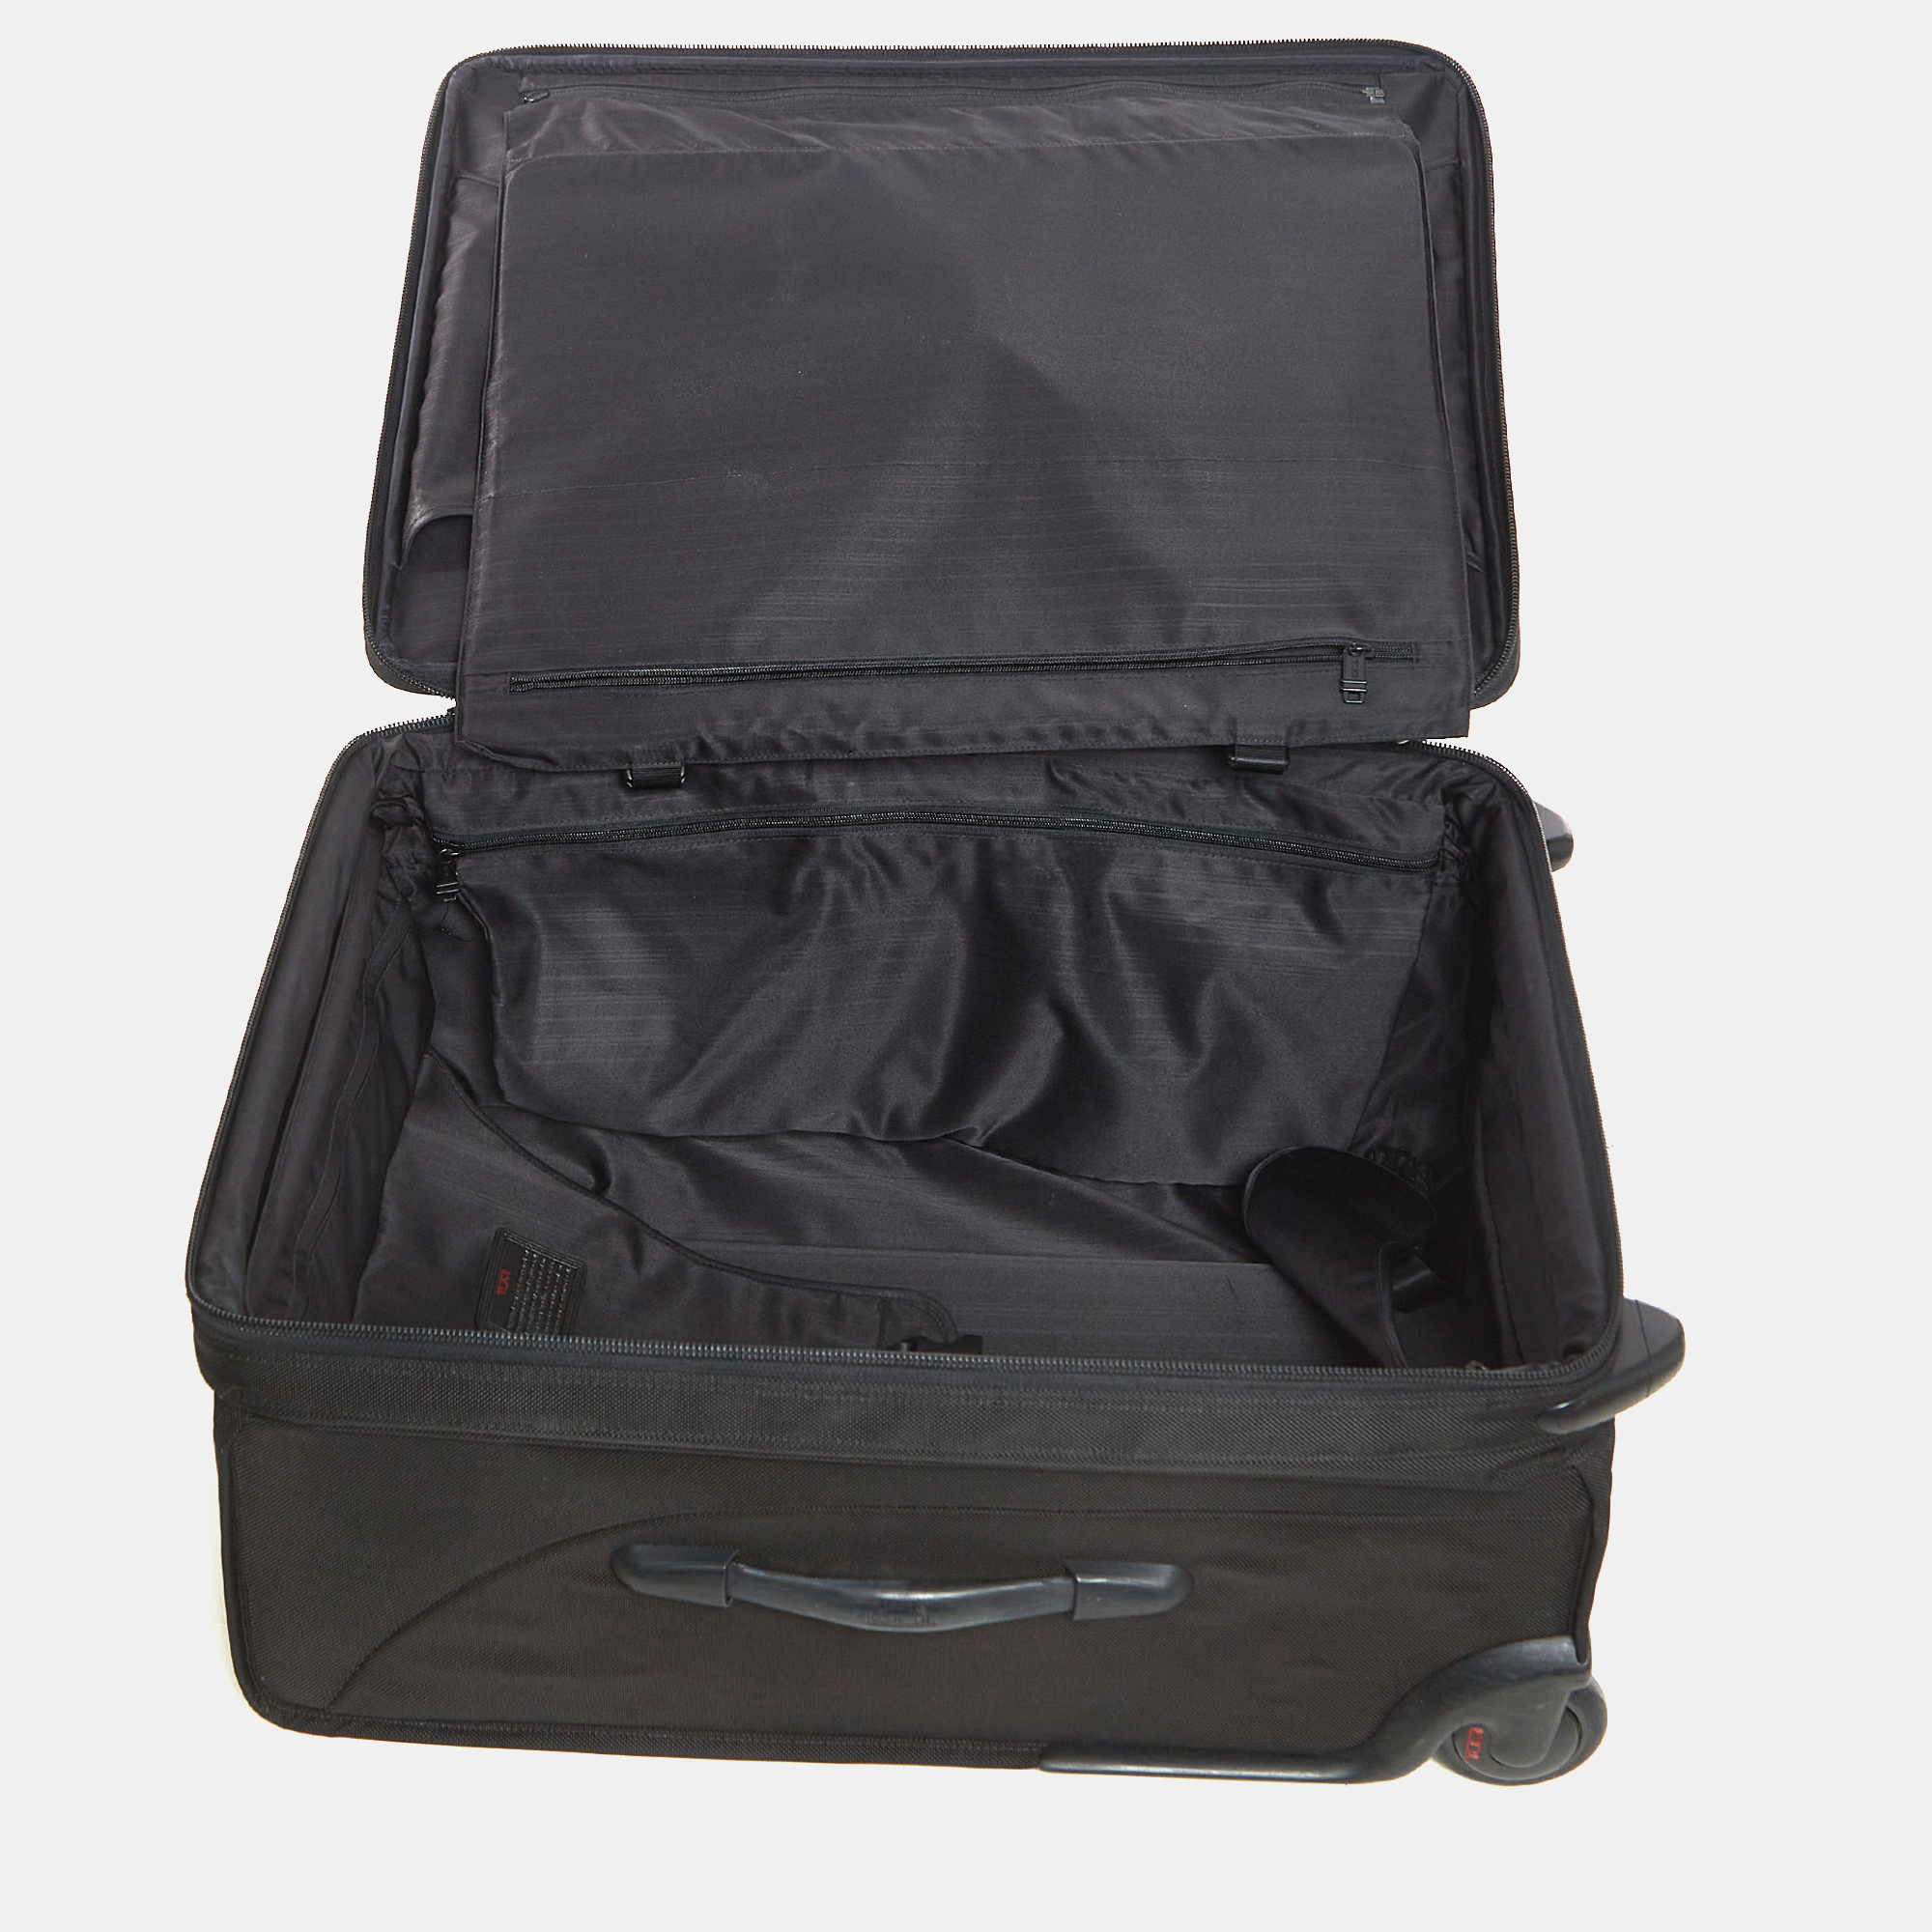 TUMI Black Nylon 2 Wheeled Alpha Extended Trip Expandable Luggage